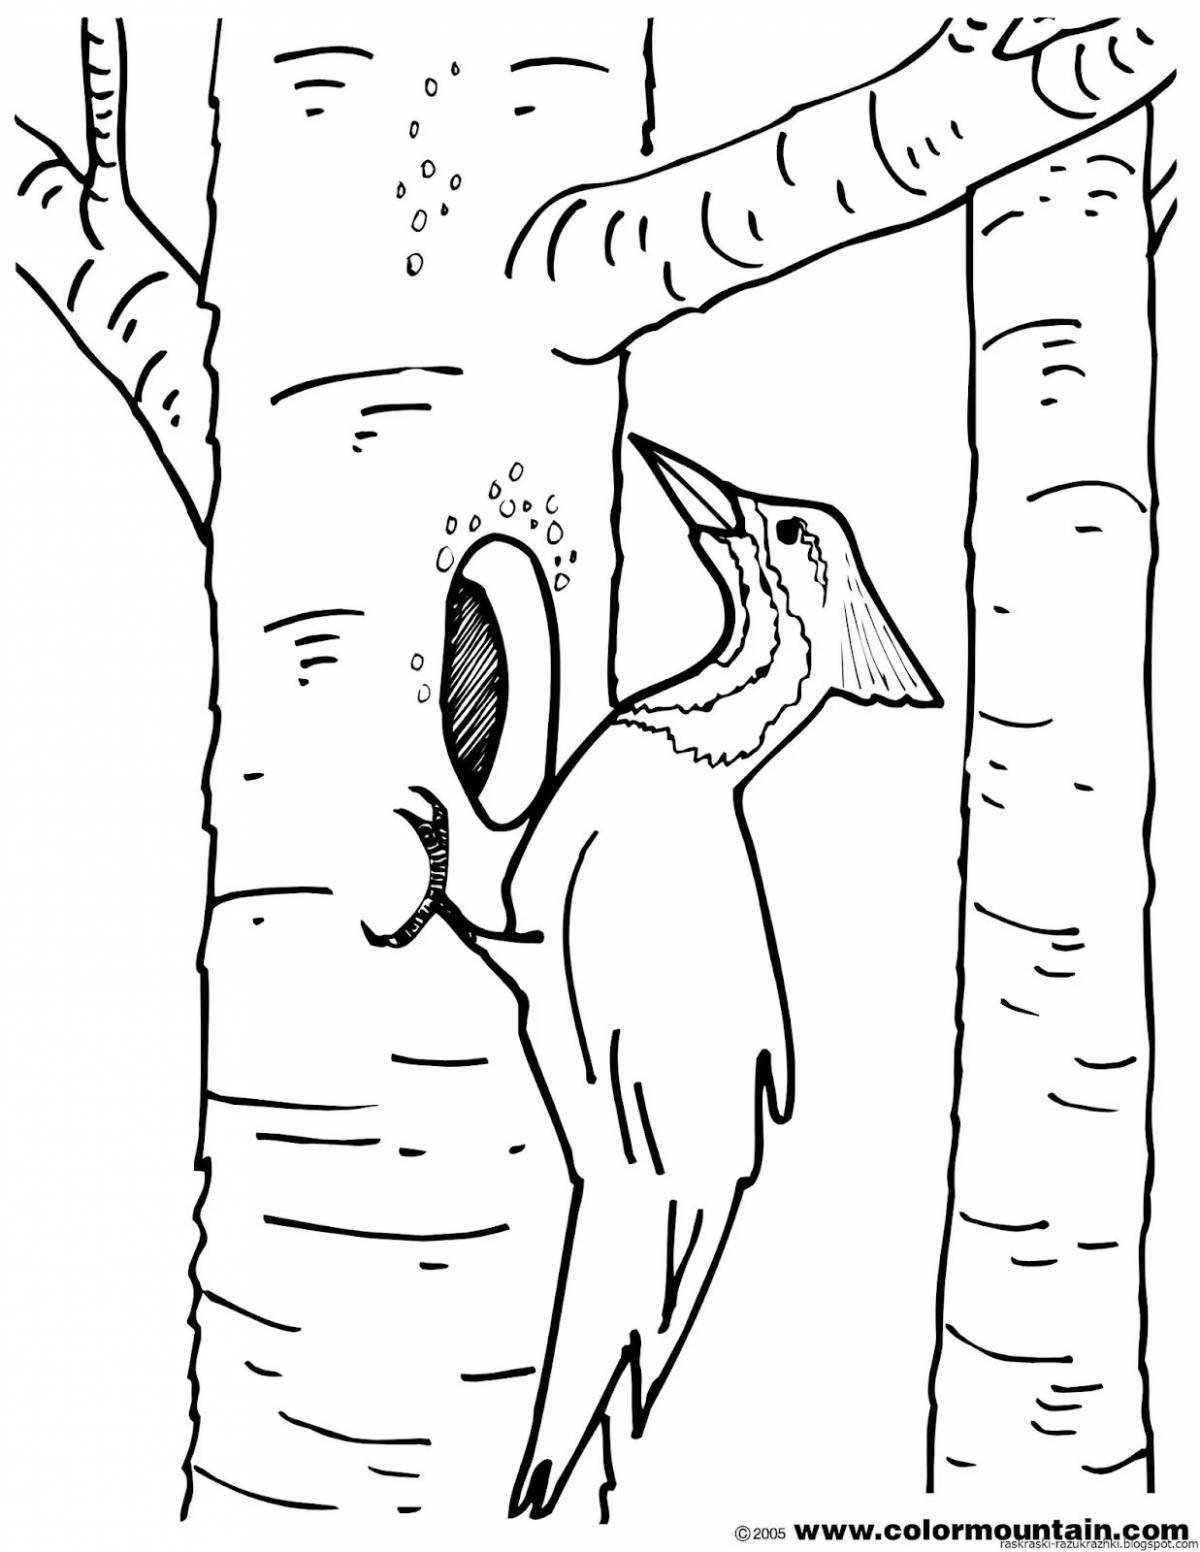 Coloring book joyful birch grove for children